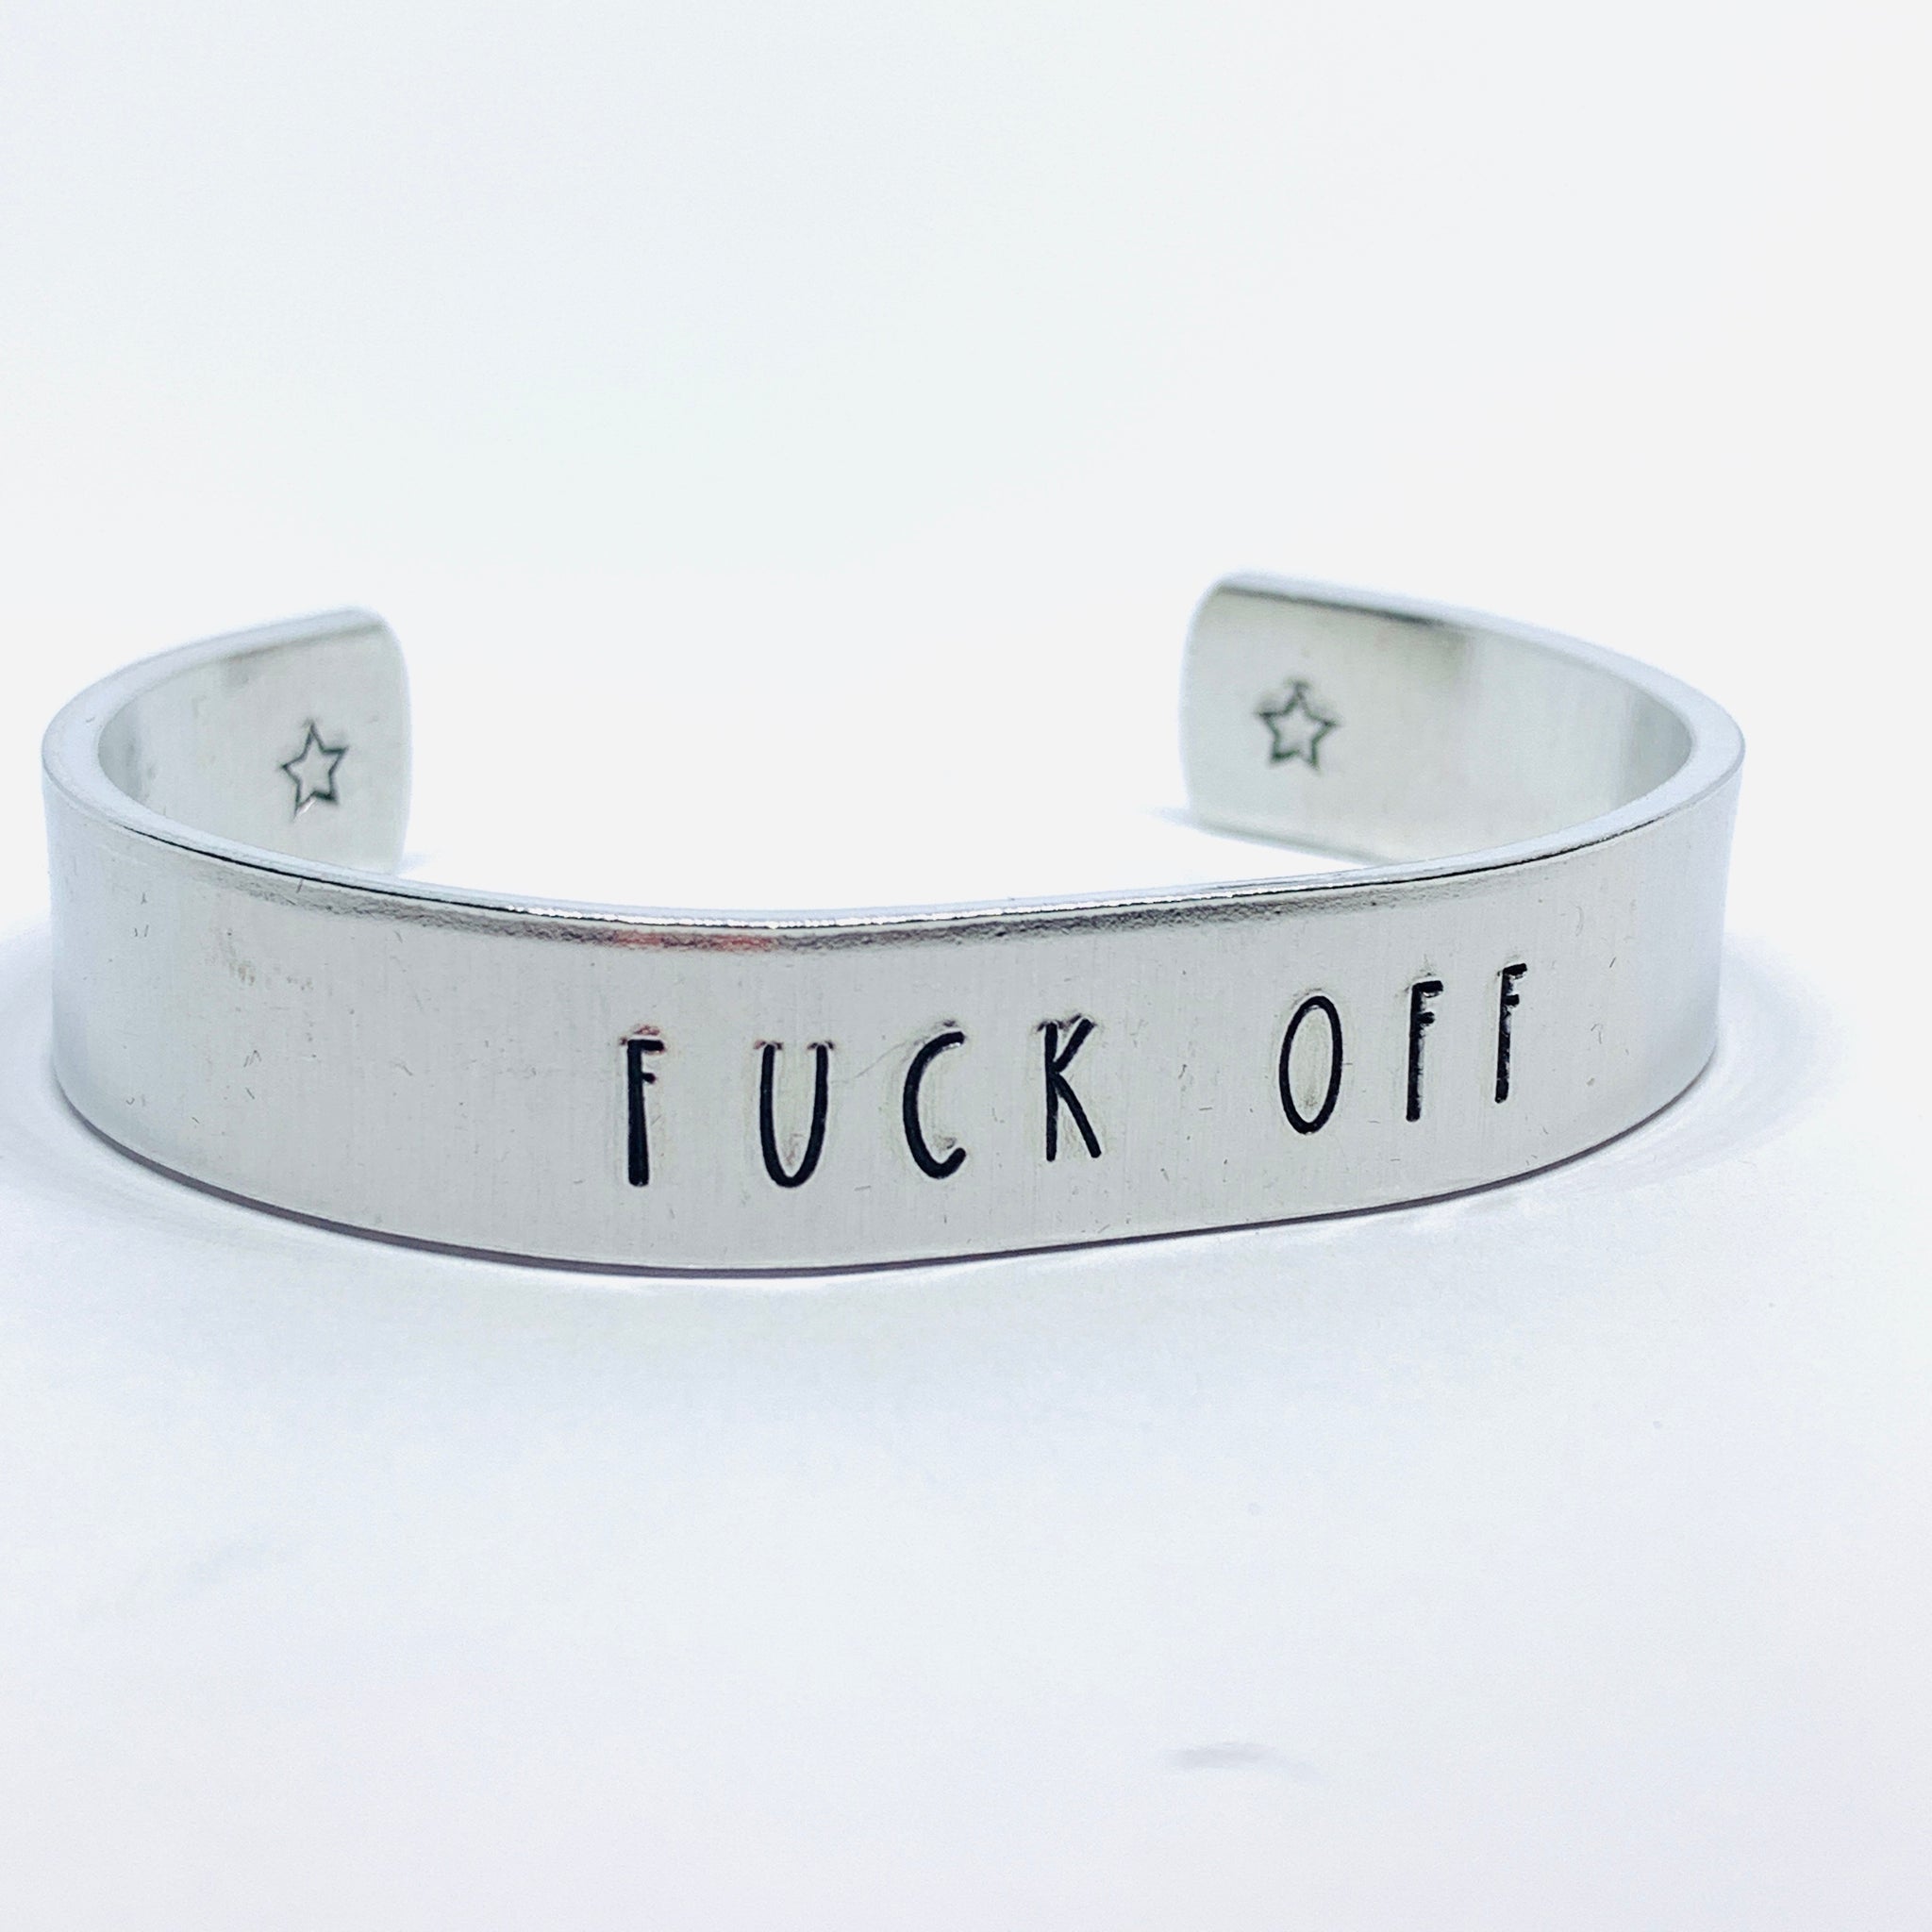 Fuck Off (1/2”) - Hand Stamped Cuff Bracelet